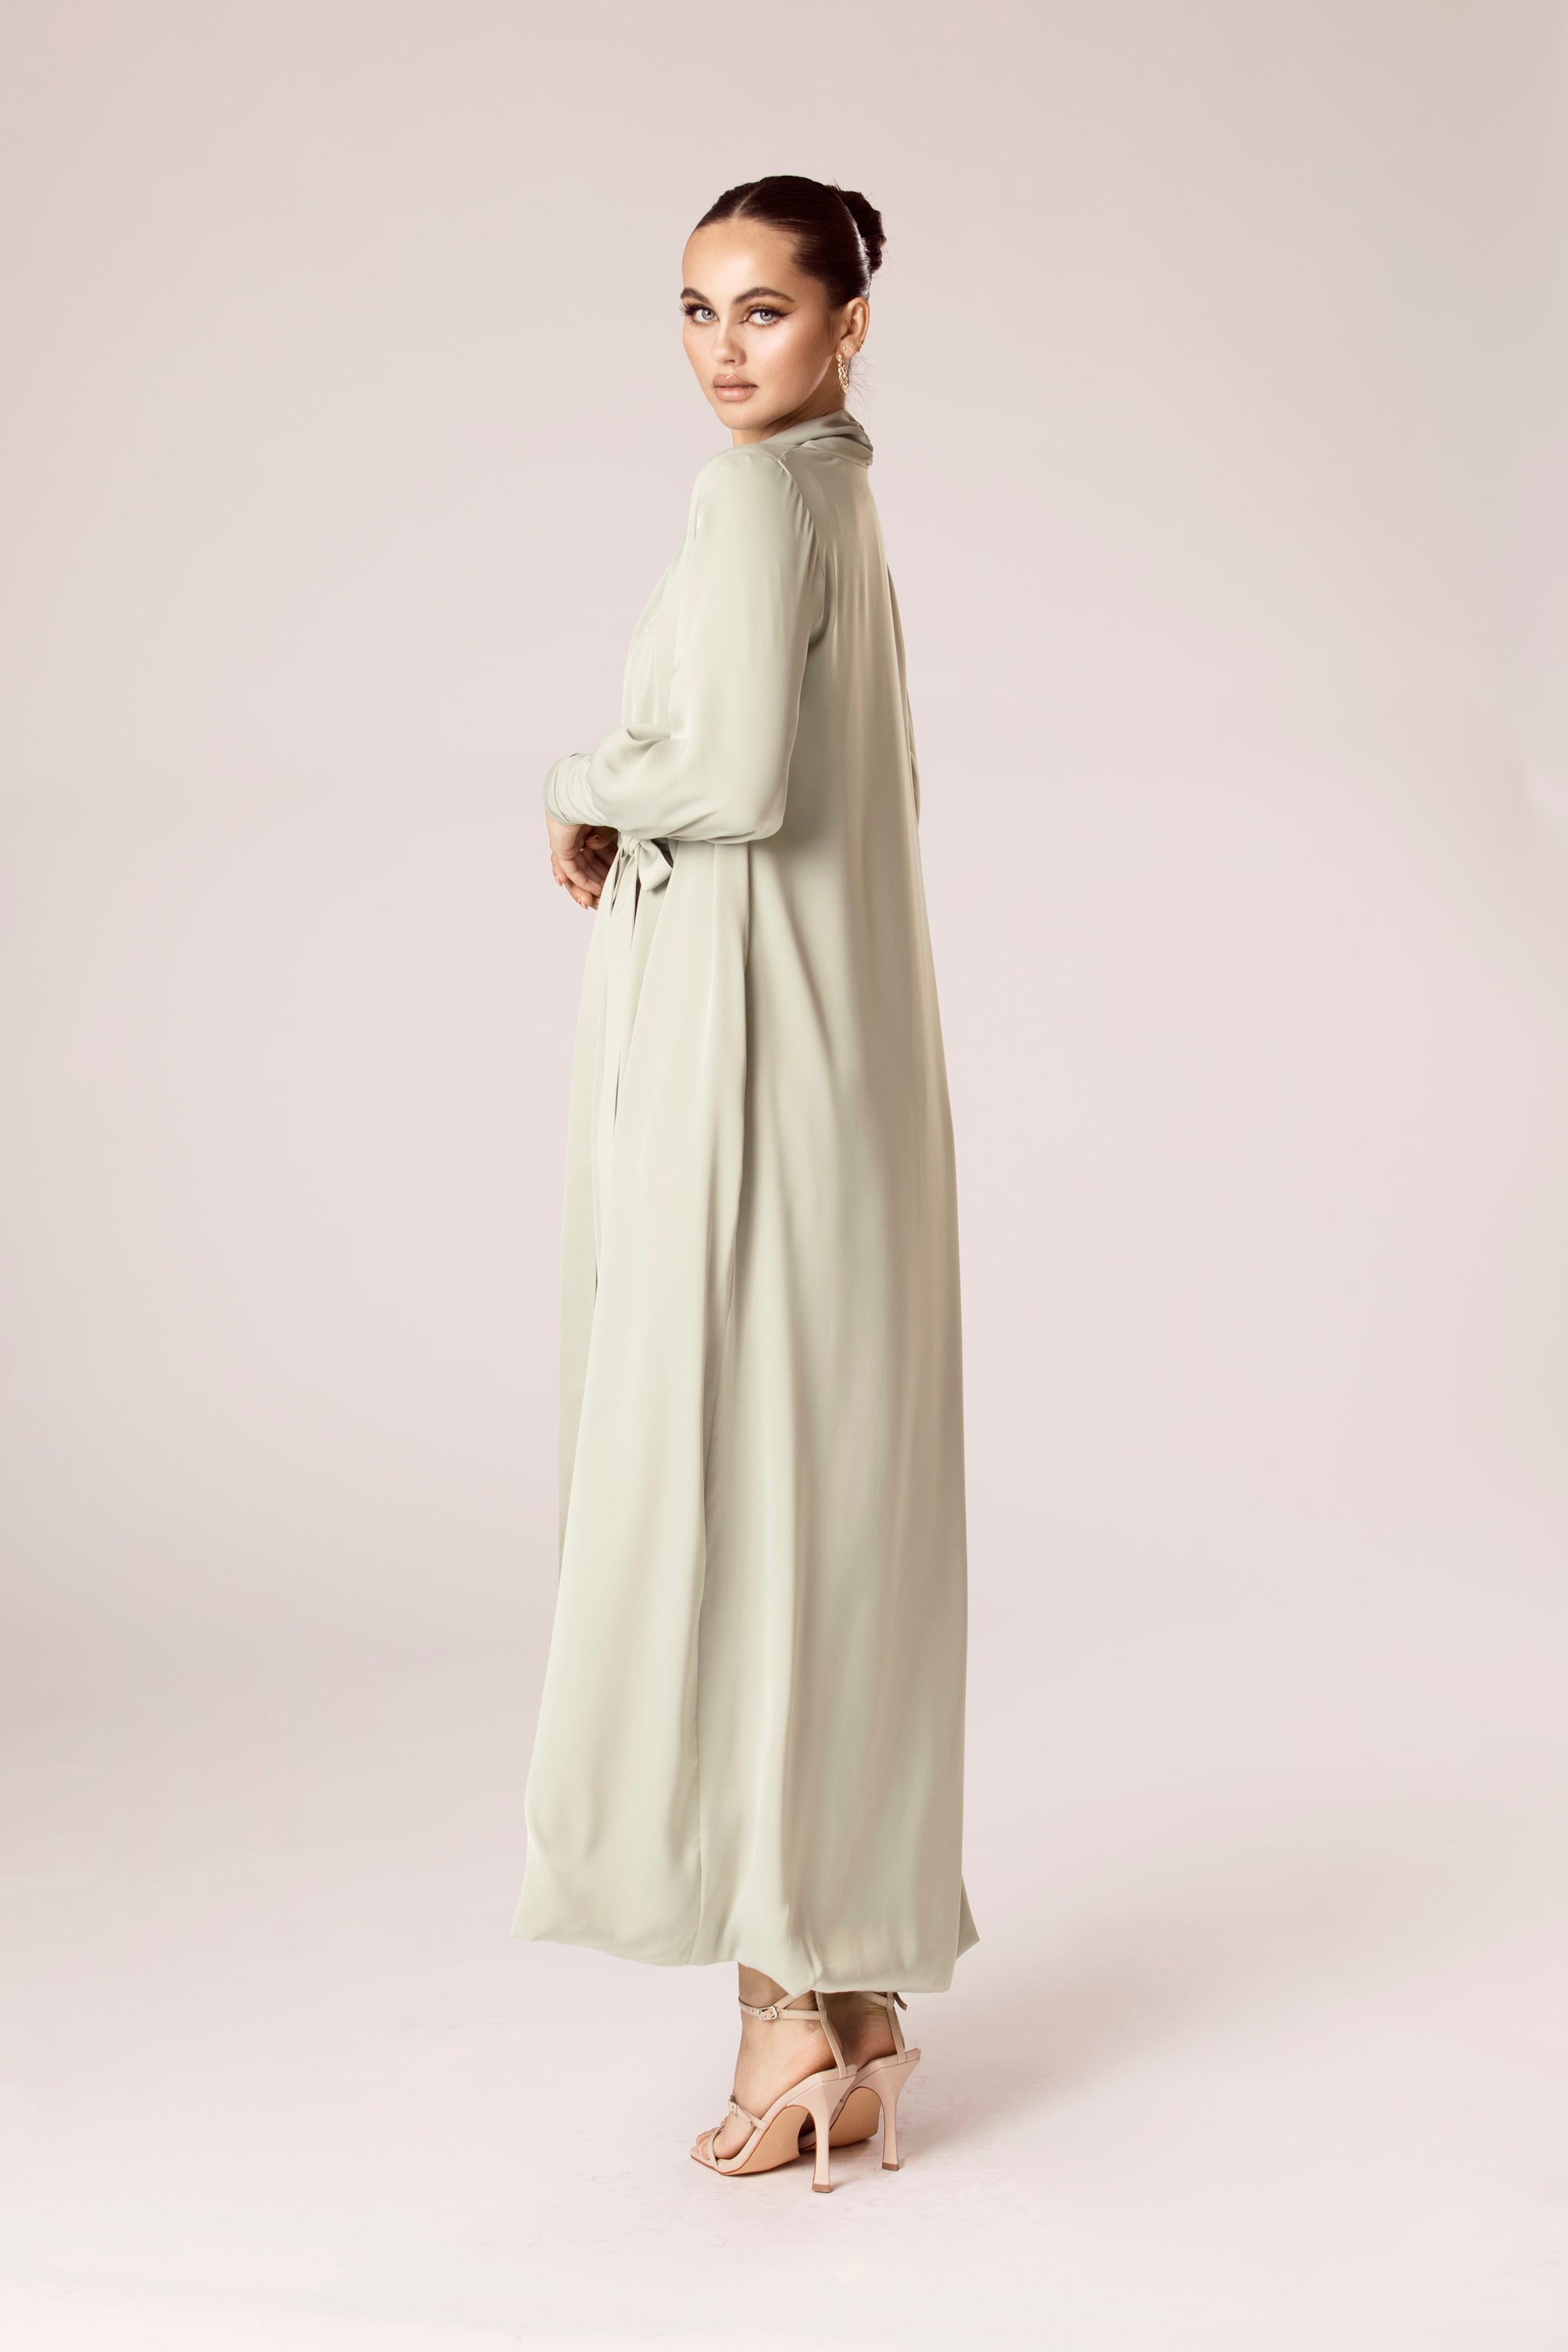 Sadia Open Abaya - Sage Veiled Collection 